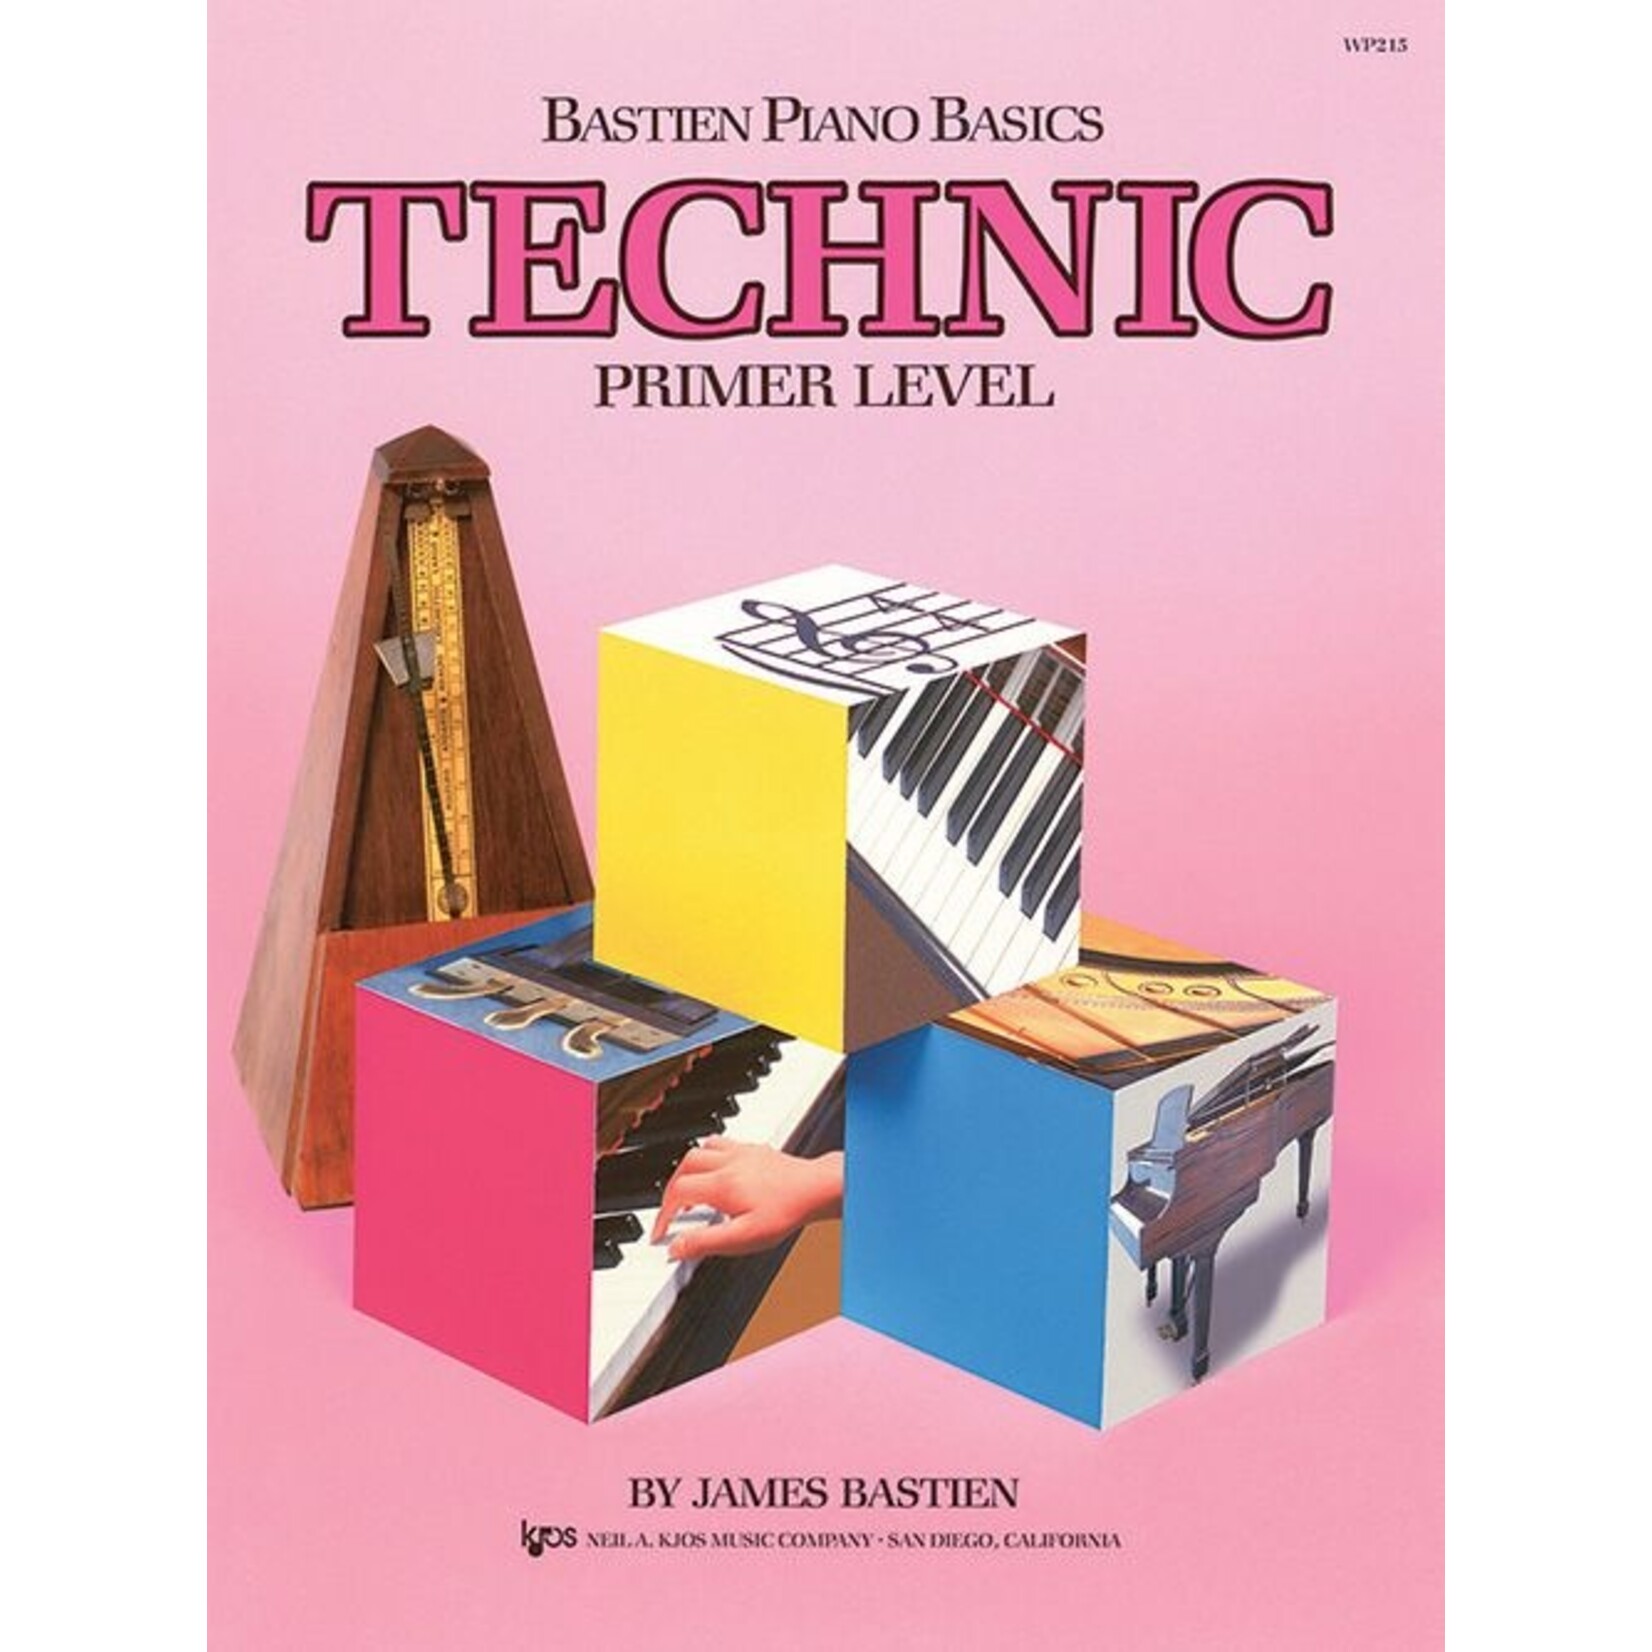 Bastien Piano Basics - Technic Primer Level